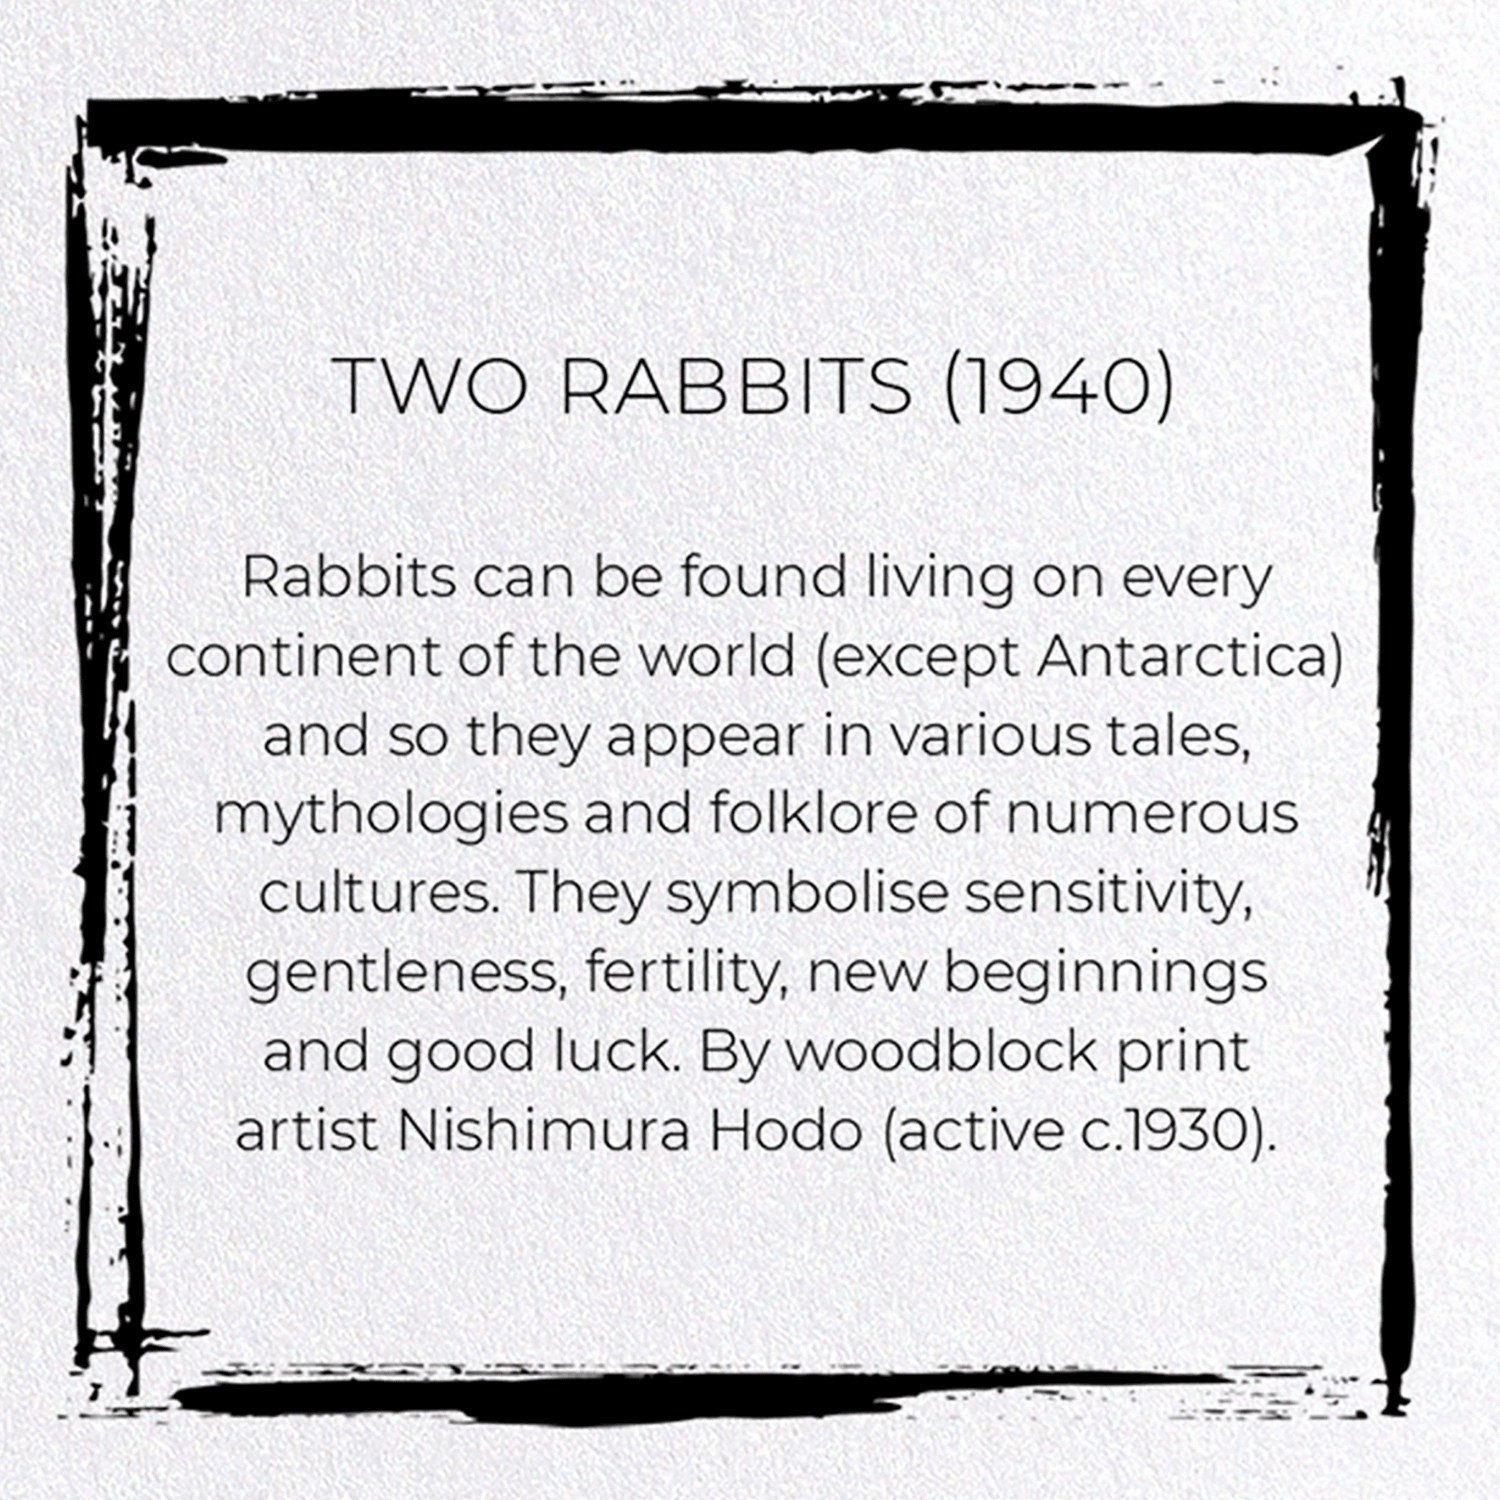 TWO RABBITS (1940): Japanese Greeting Card